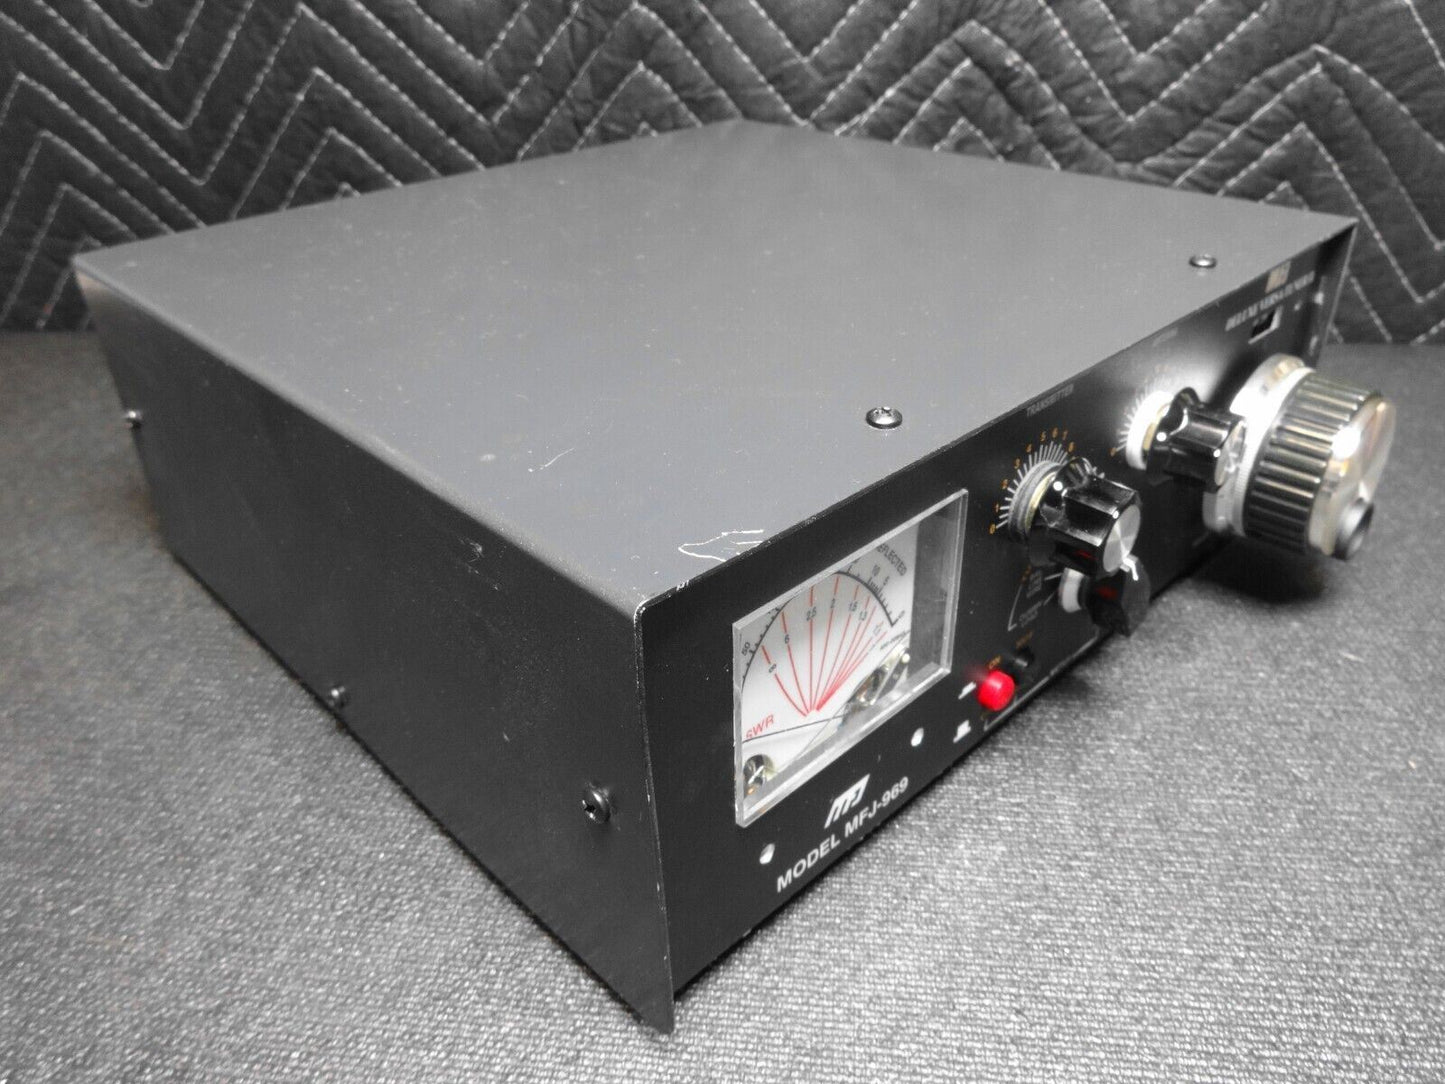 MFJ-969 Manual Tuner + SWR, 1.8-50Mhz, 30/300W